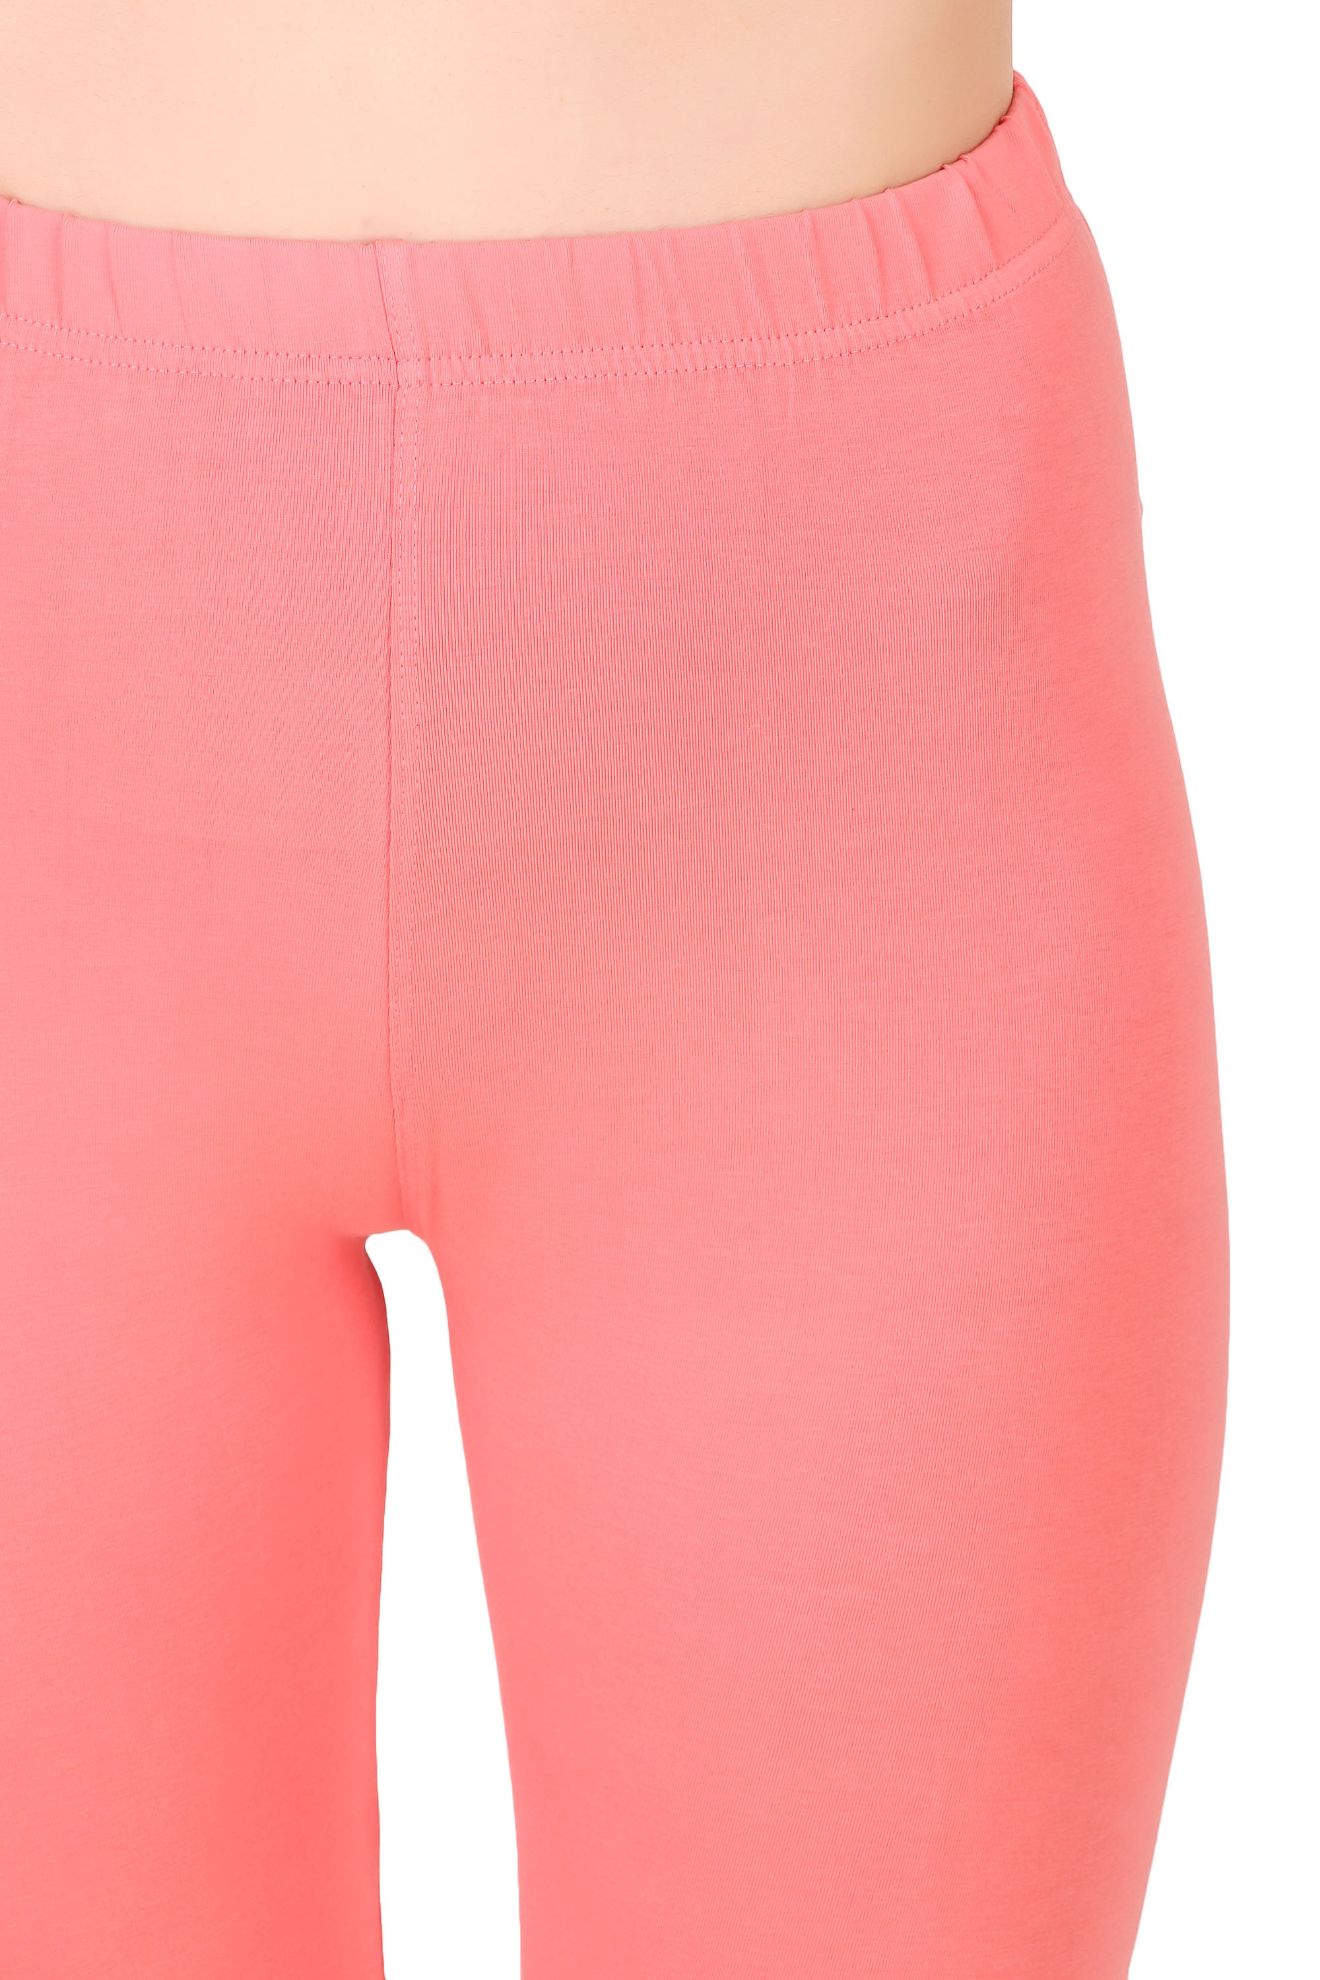 Classy Coral Pink Coloured Plain Cotton Leggings